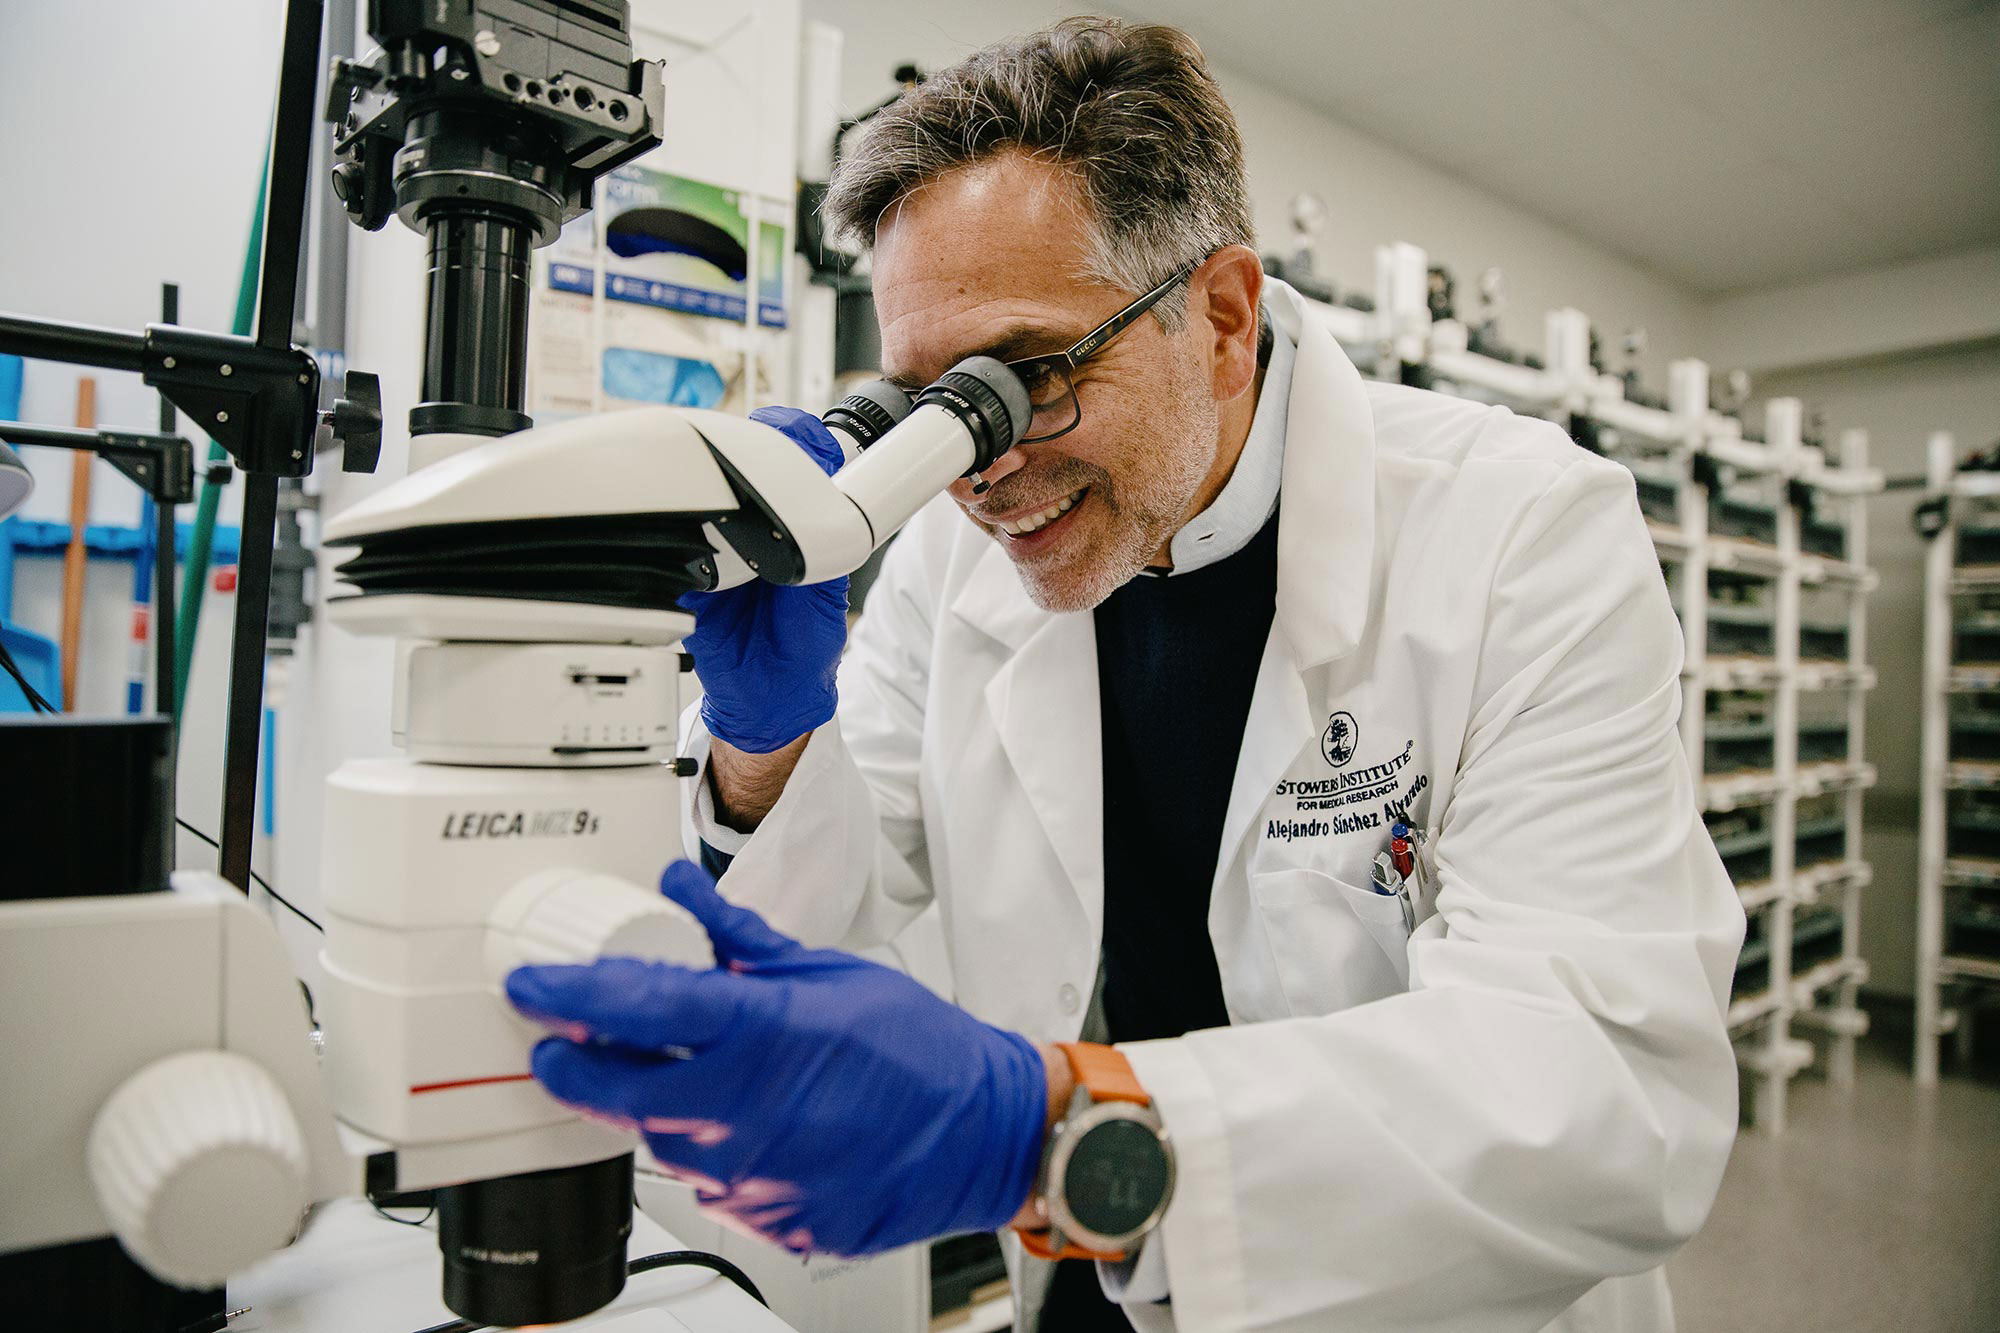 Alejandro Sánchez Alvarado in a white lab coat, examines a specimen through a microscope.